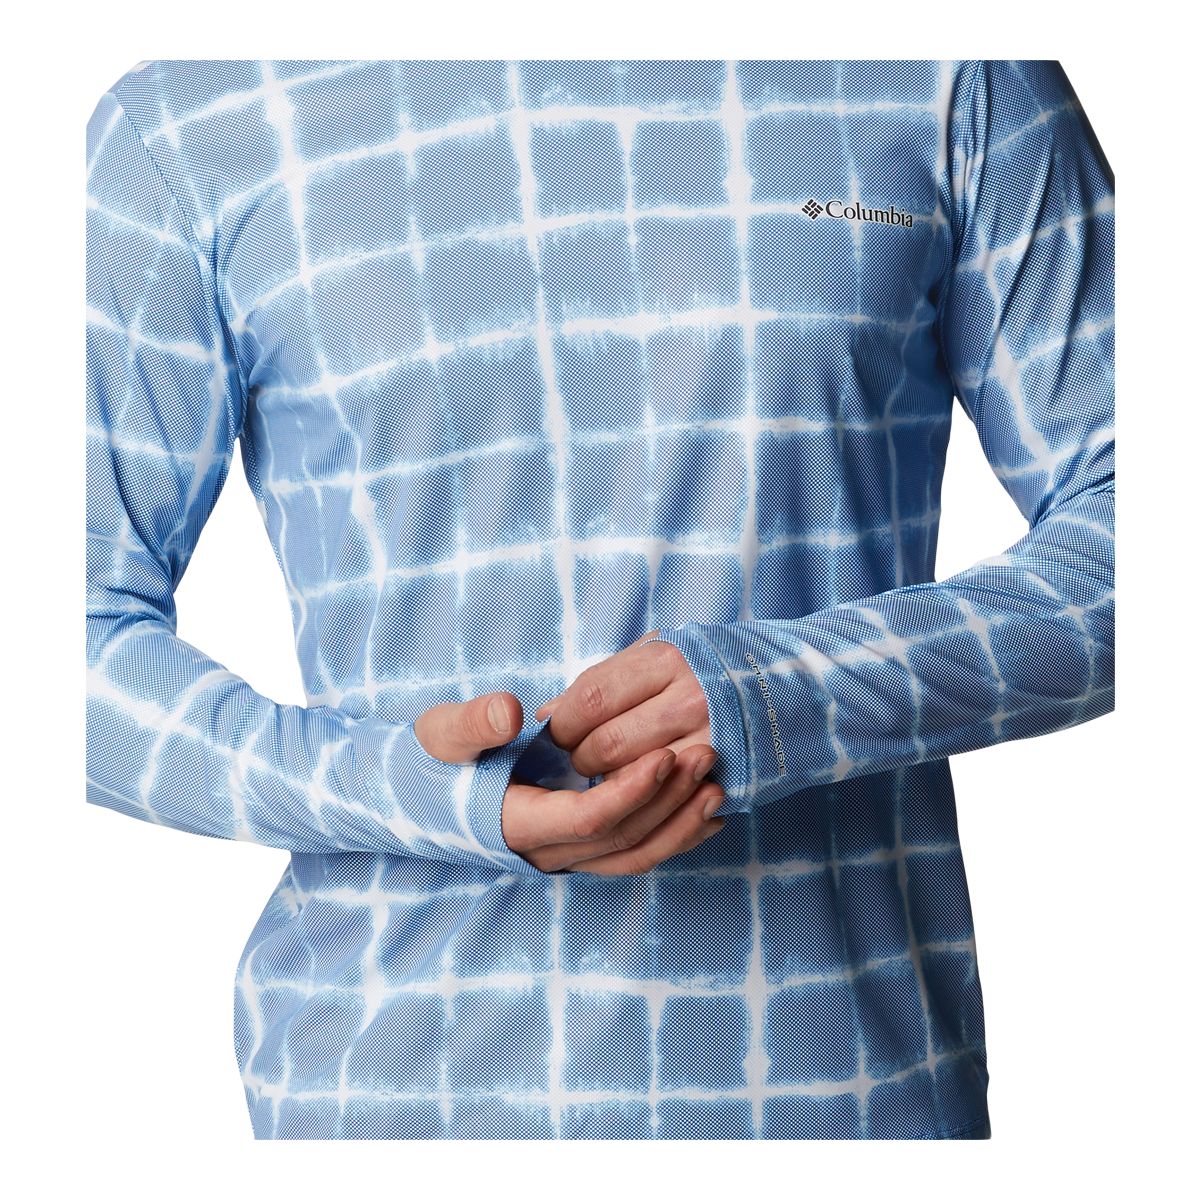 Men's UPF 50+ UV Long Sleeve Athletic Shirts - Cycorld  Long sleeve shirt  men, Athletic shirts, Long sleeve shirts